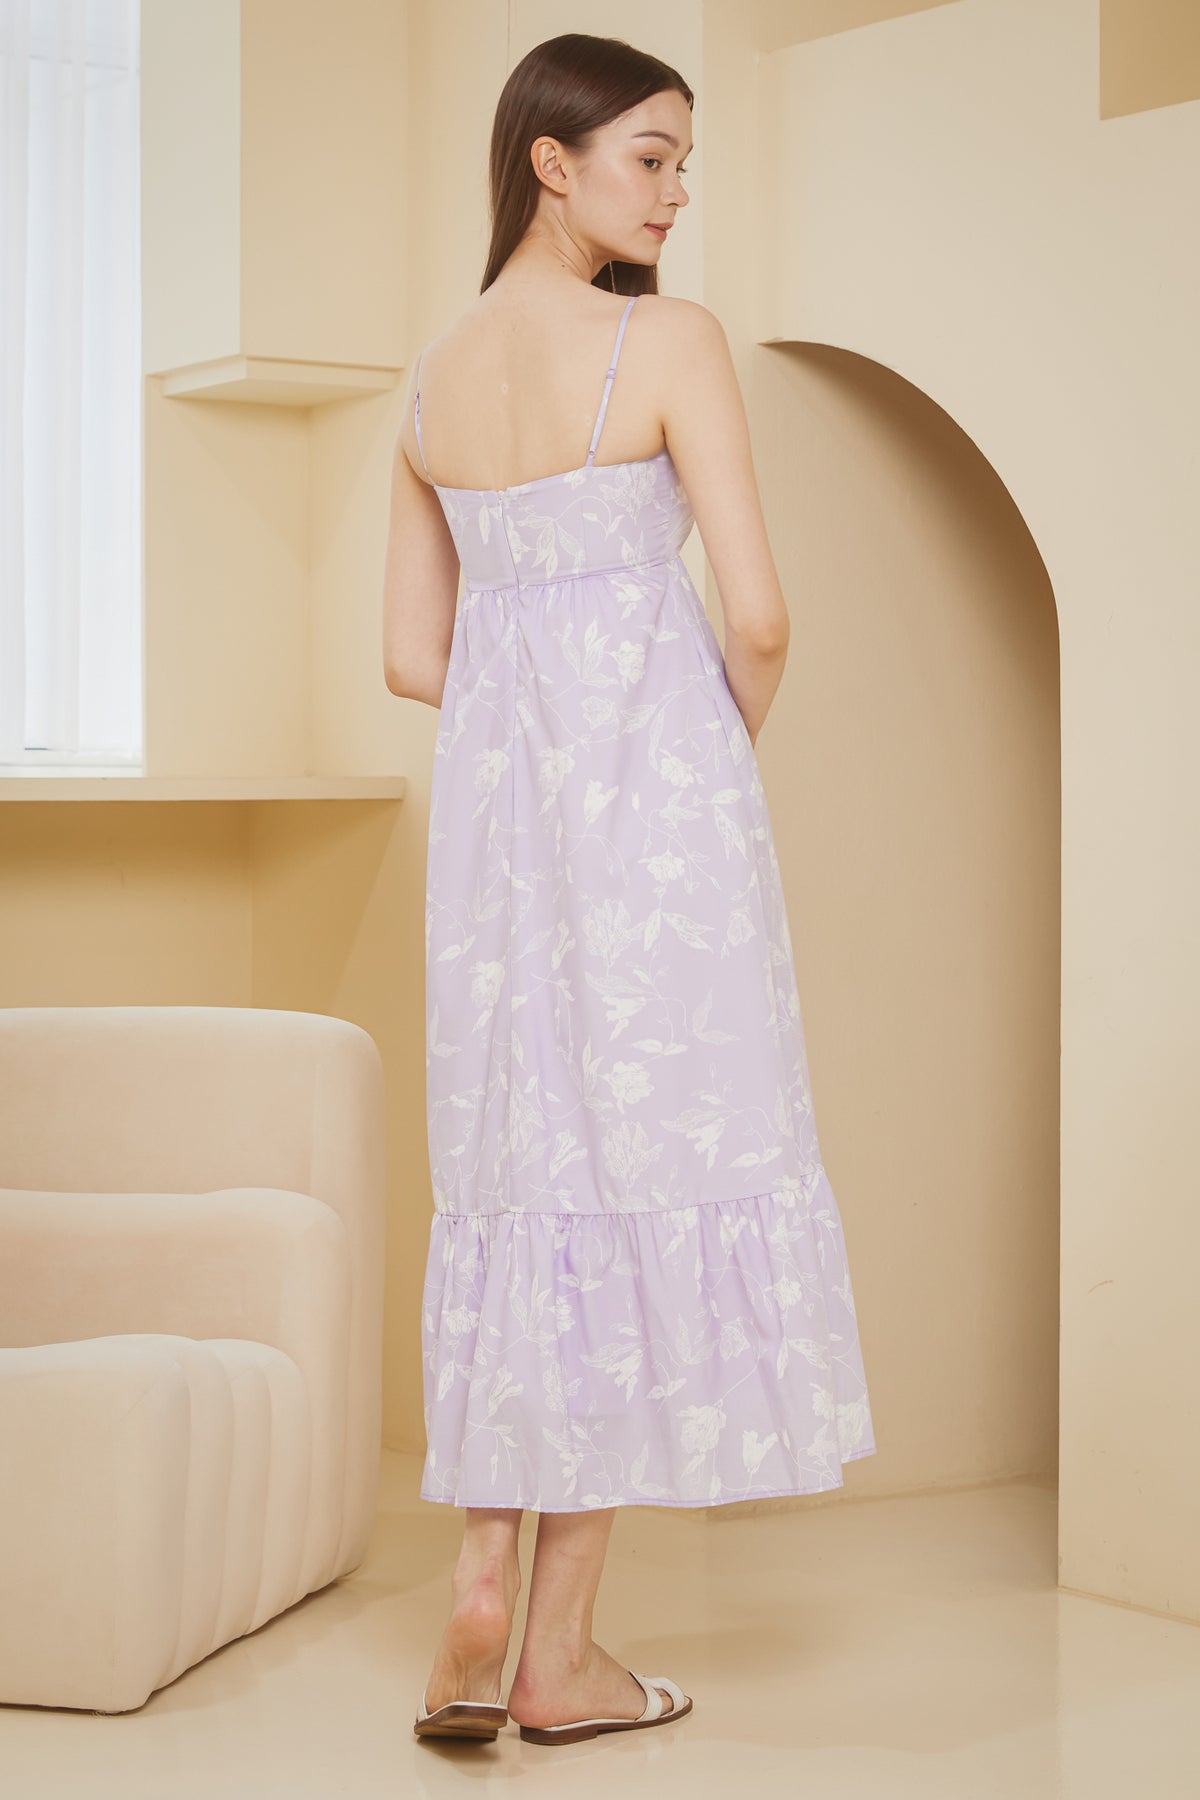 Springleaf Strappy Drophem Dress in Lilac